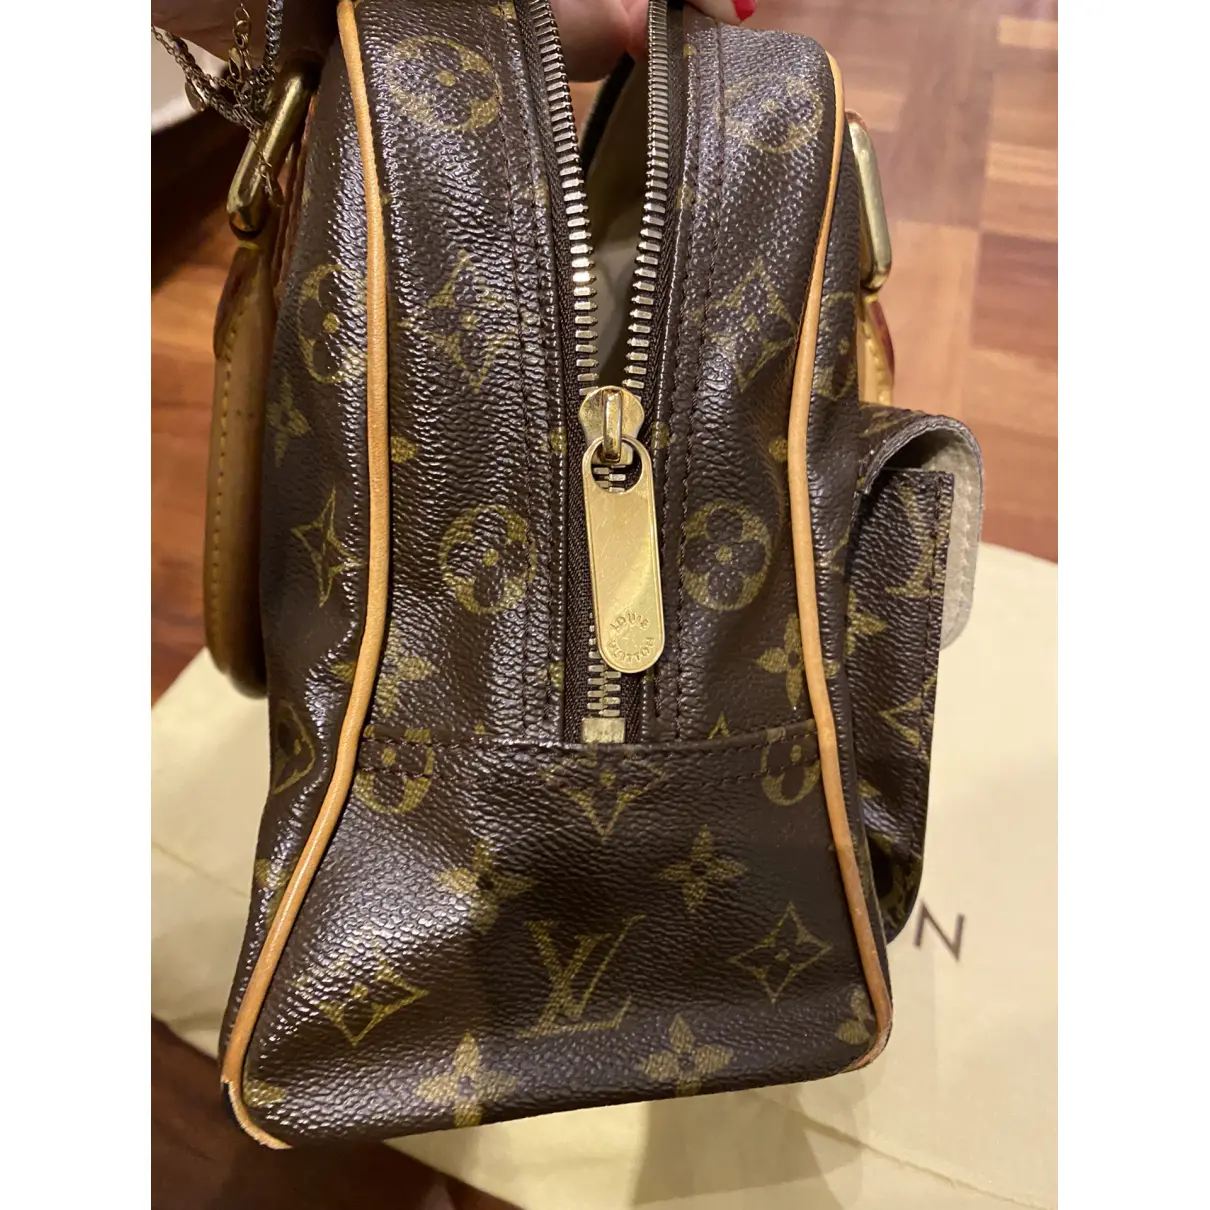 Manhattan leather handbag Louis Vuitton